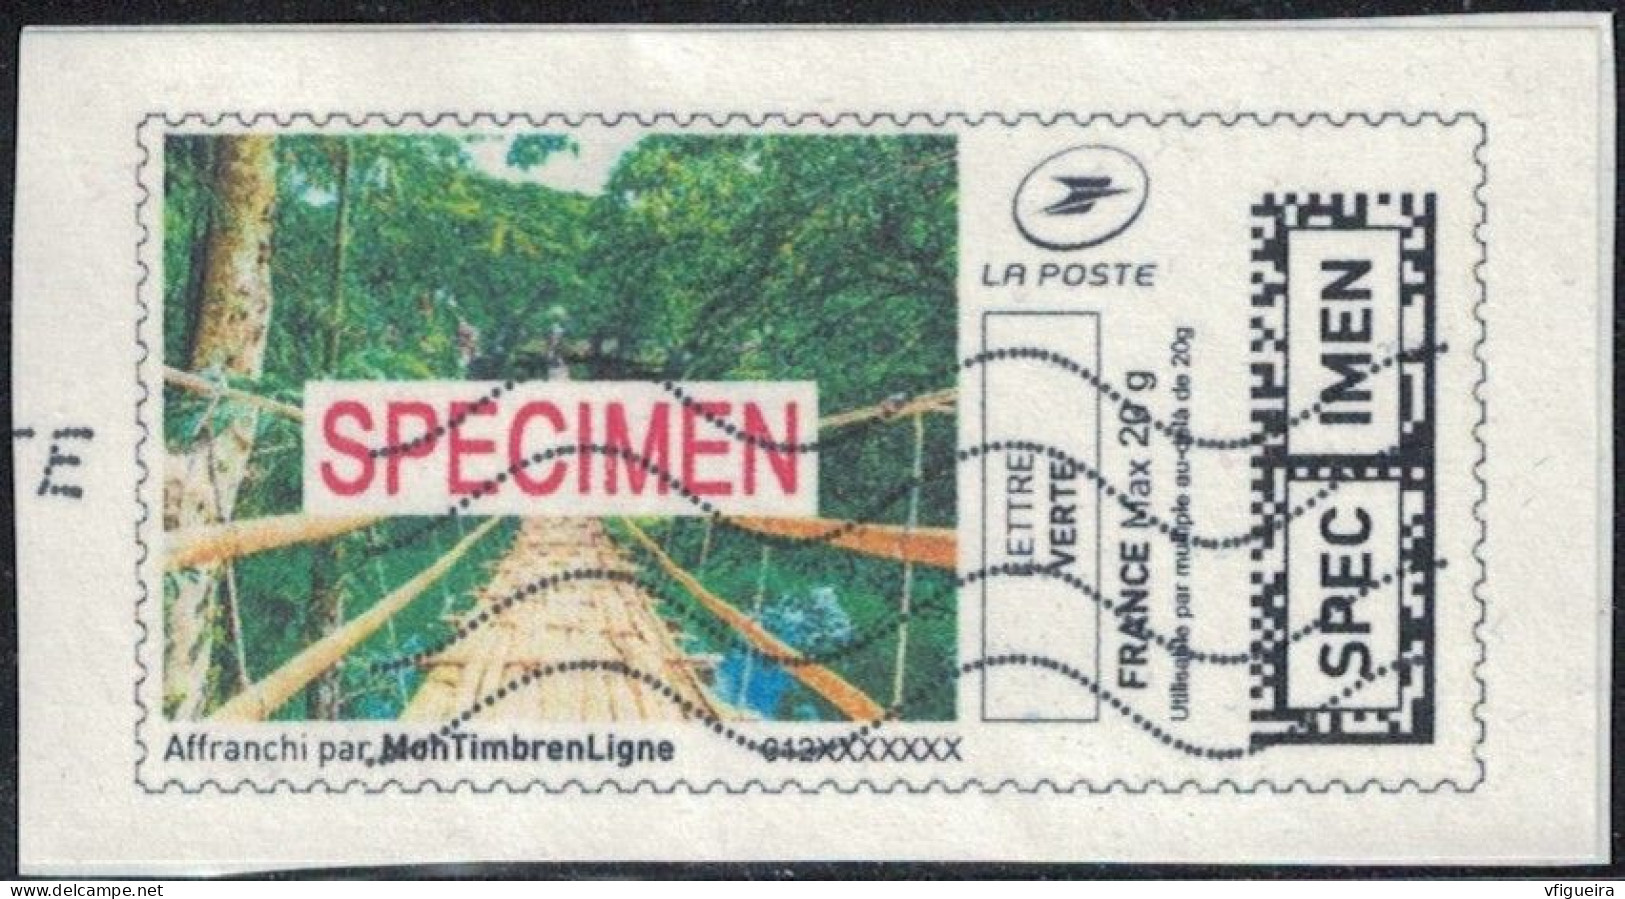 France Vignette Sur Fragment Used Mon Timbre En Ligne Spécimen Affranchie SU - Printable Stamps (Montimbrenligne)